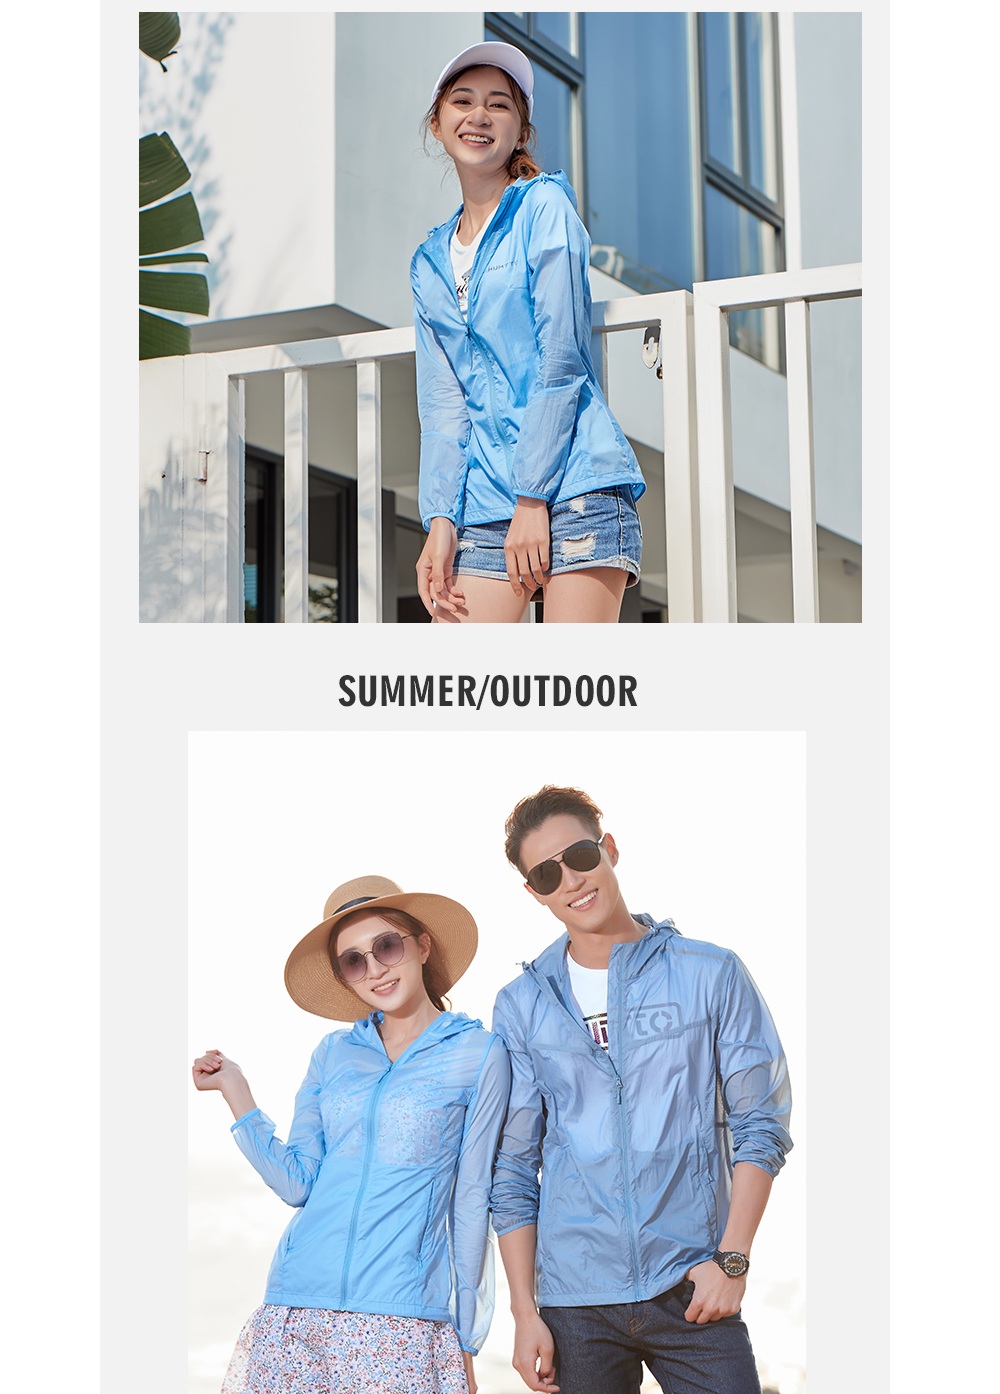 HUMTTO Sun-protective Jacket Women Ultralight Summer Sunscreen Skin Clothes